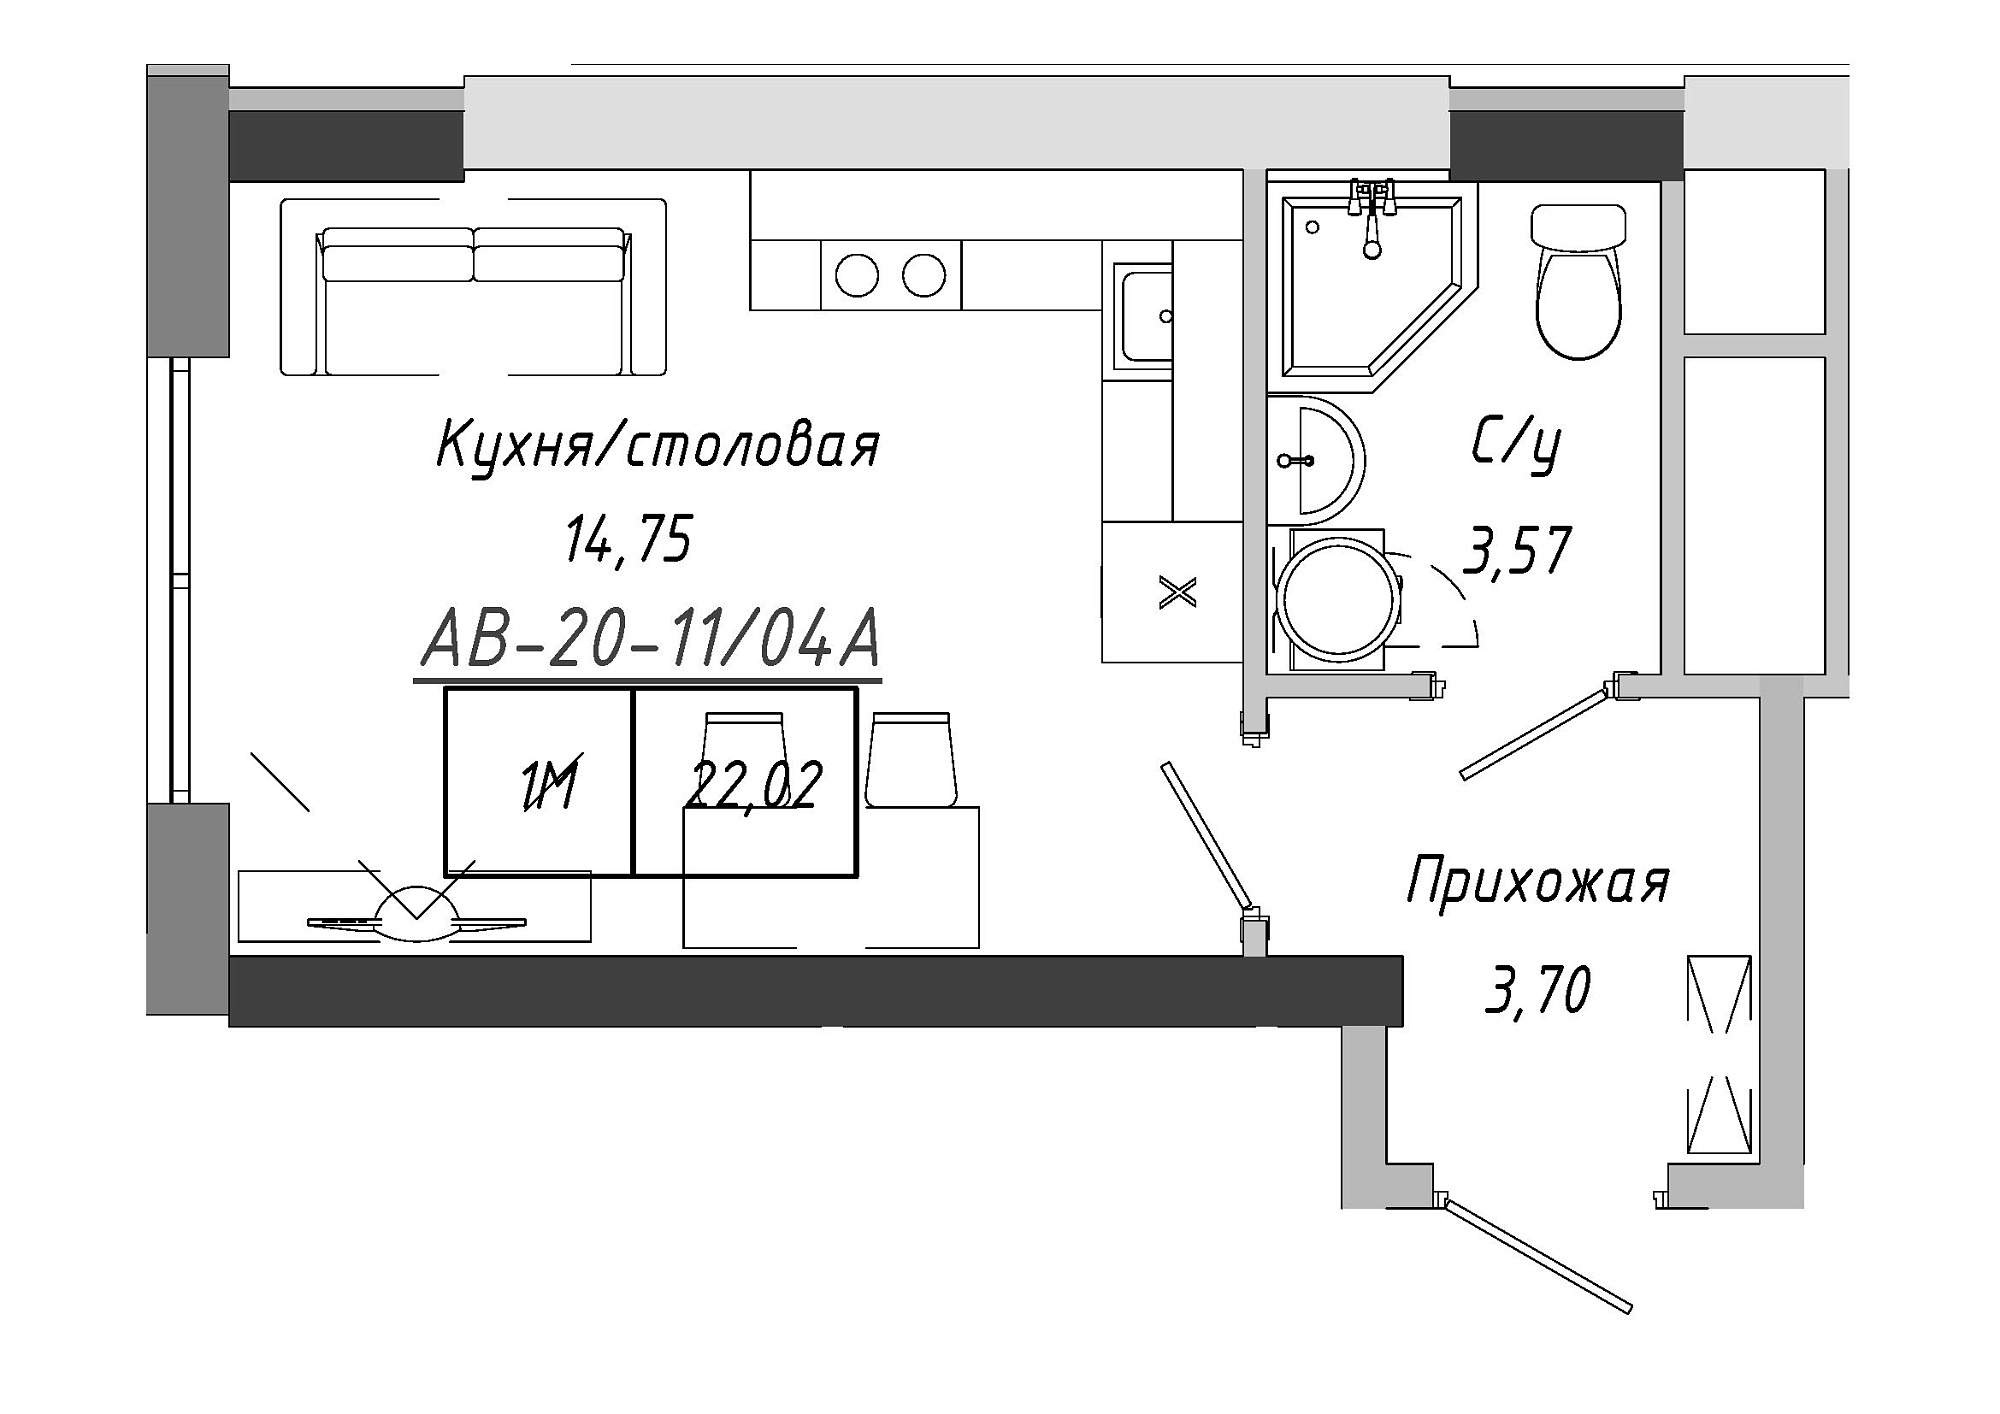 Planning Smart flats area 21.3m2, AB-20-11/0004а.